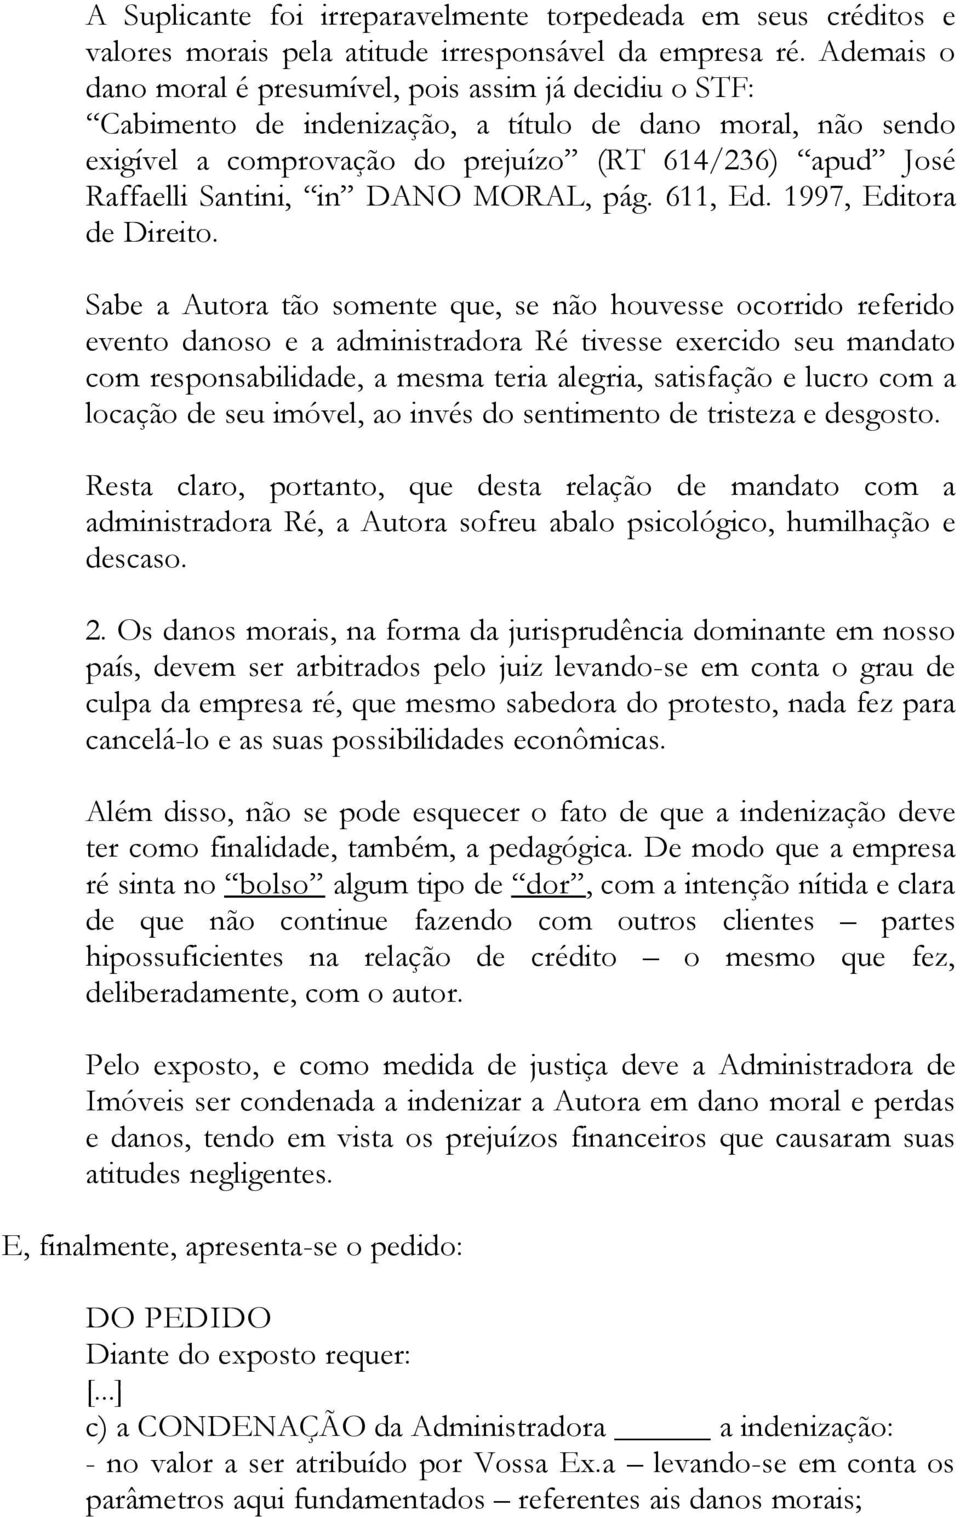 Santini, in DANO MORAL, pág. 611, Ed. 1997, Editora de Direito.